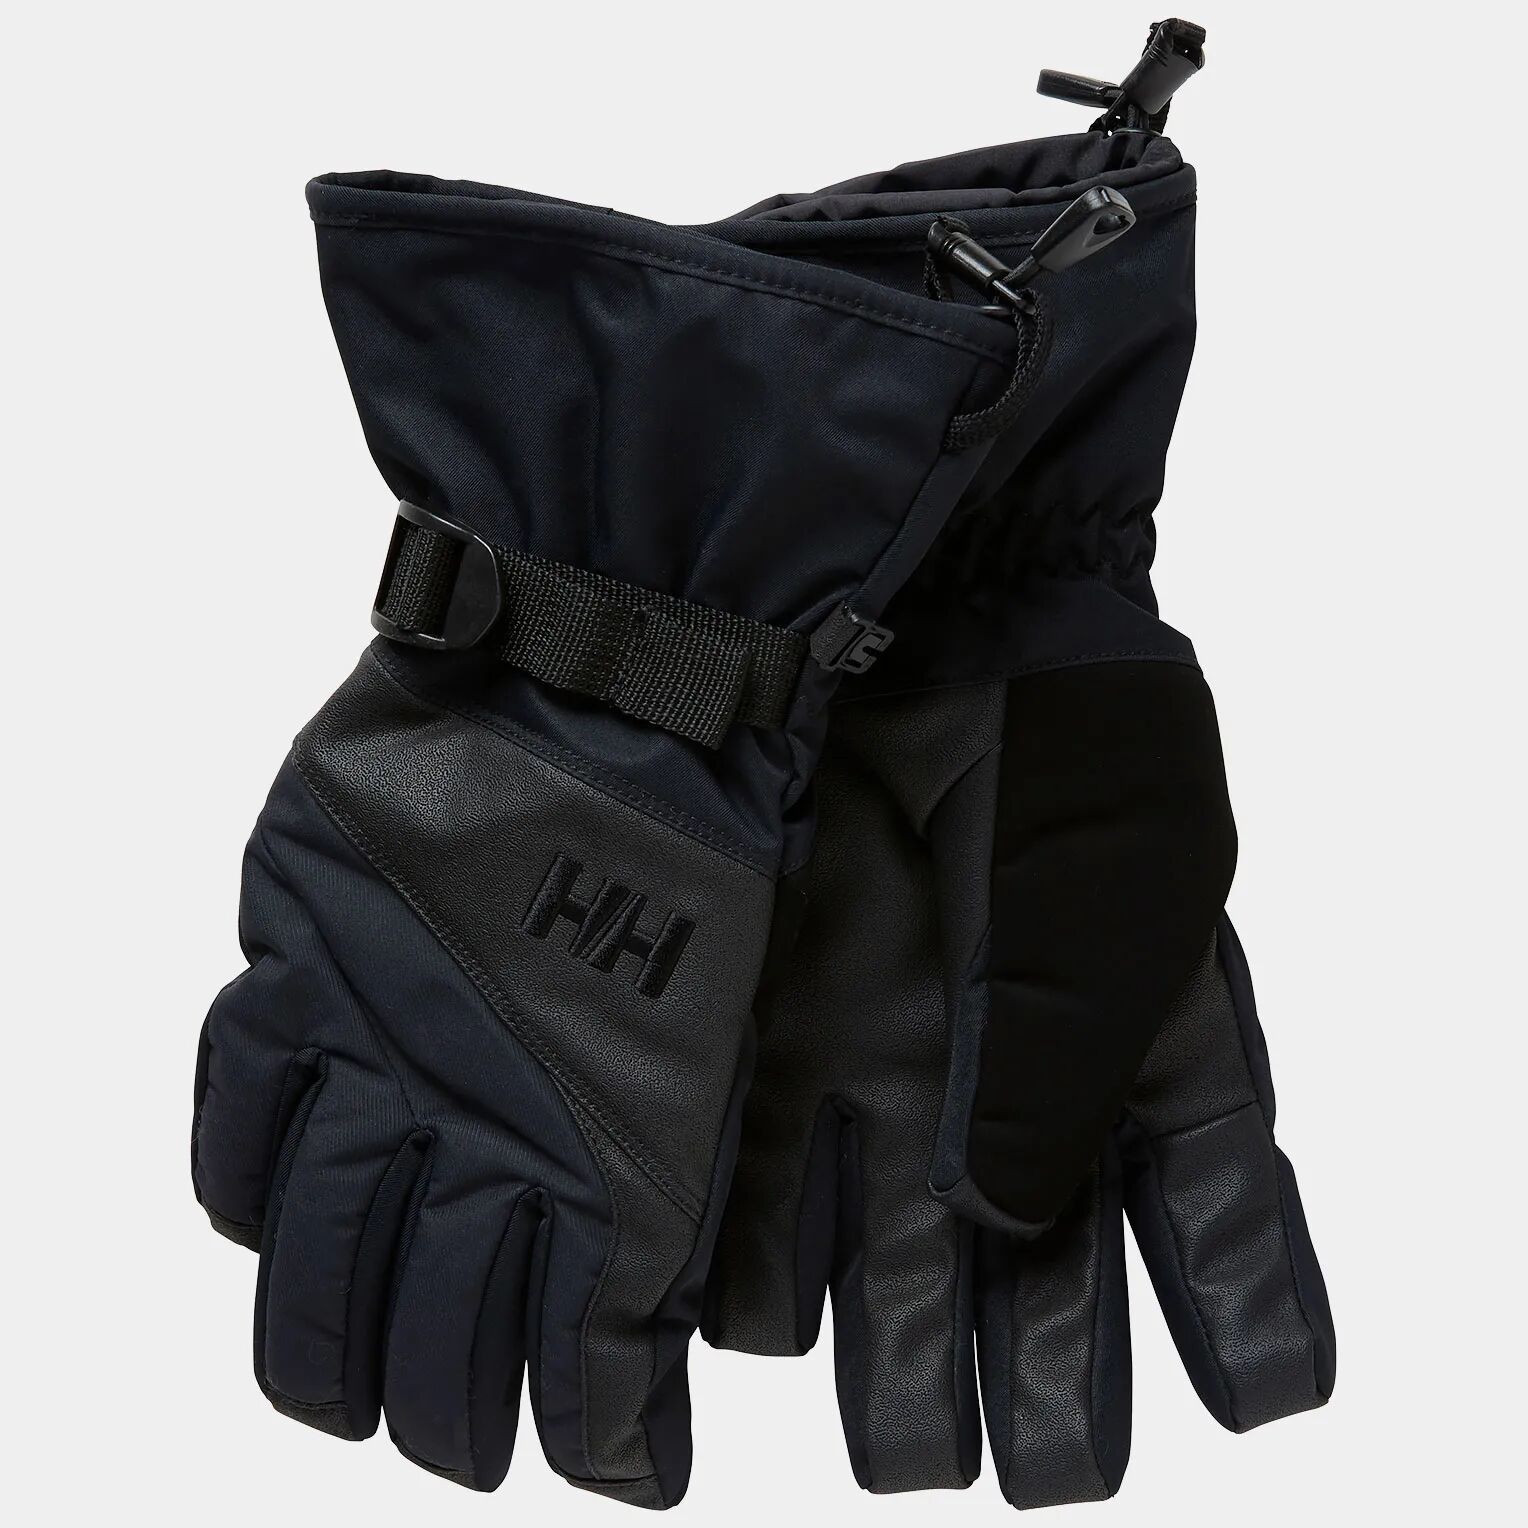 Helly Hansen Women's Freeride Waterproof Ski Gloves Black M